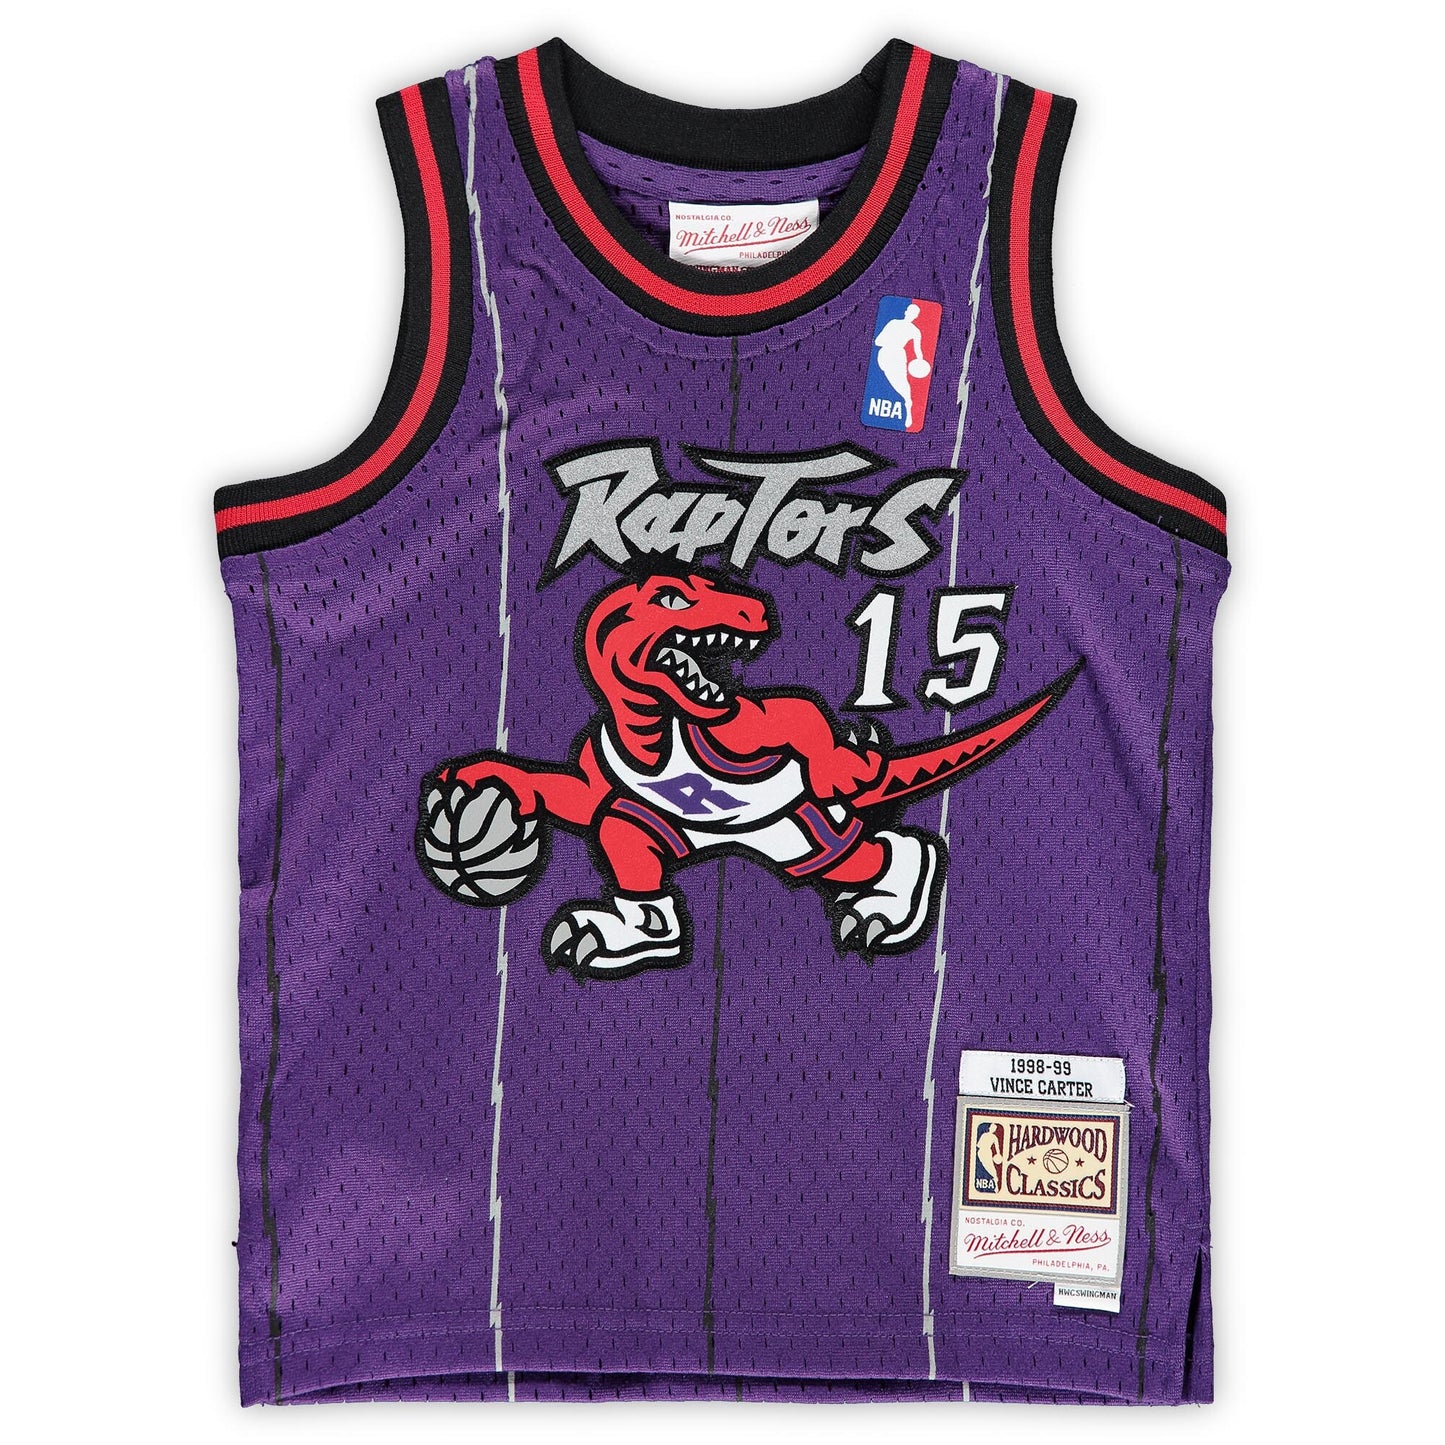 Vince Carter Toronto Raptors Mitchell & Ness Preschool 1998-99 Hardwood Classics Player Jersey - Purple